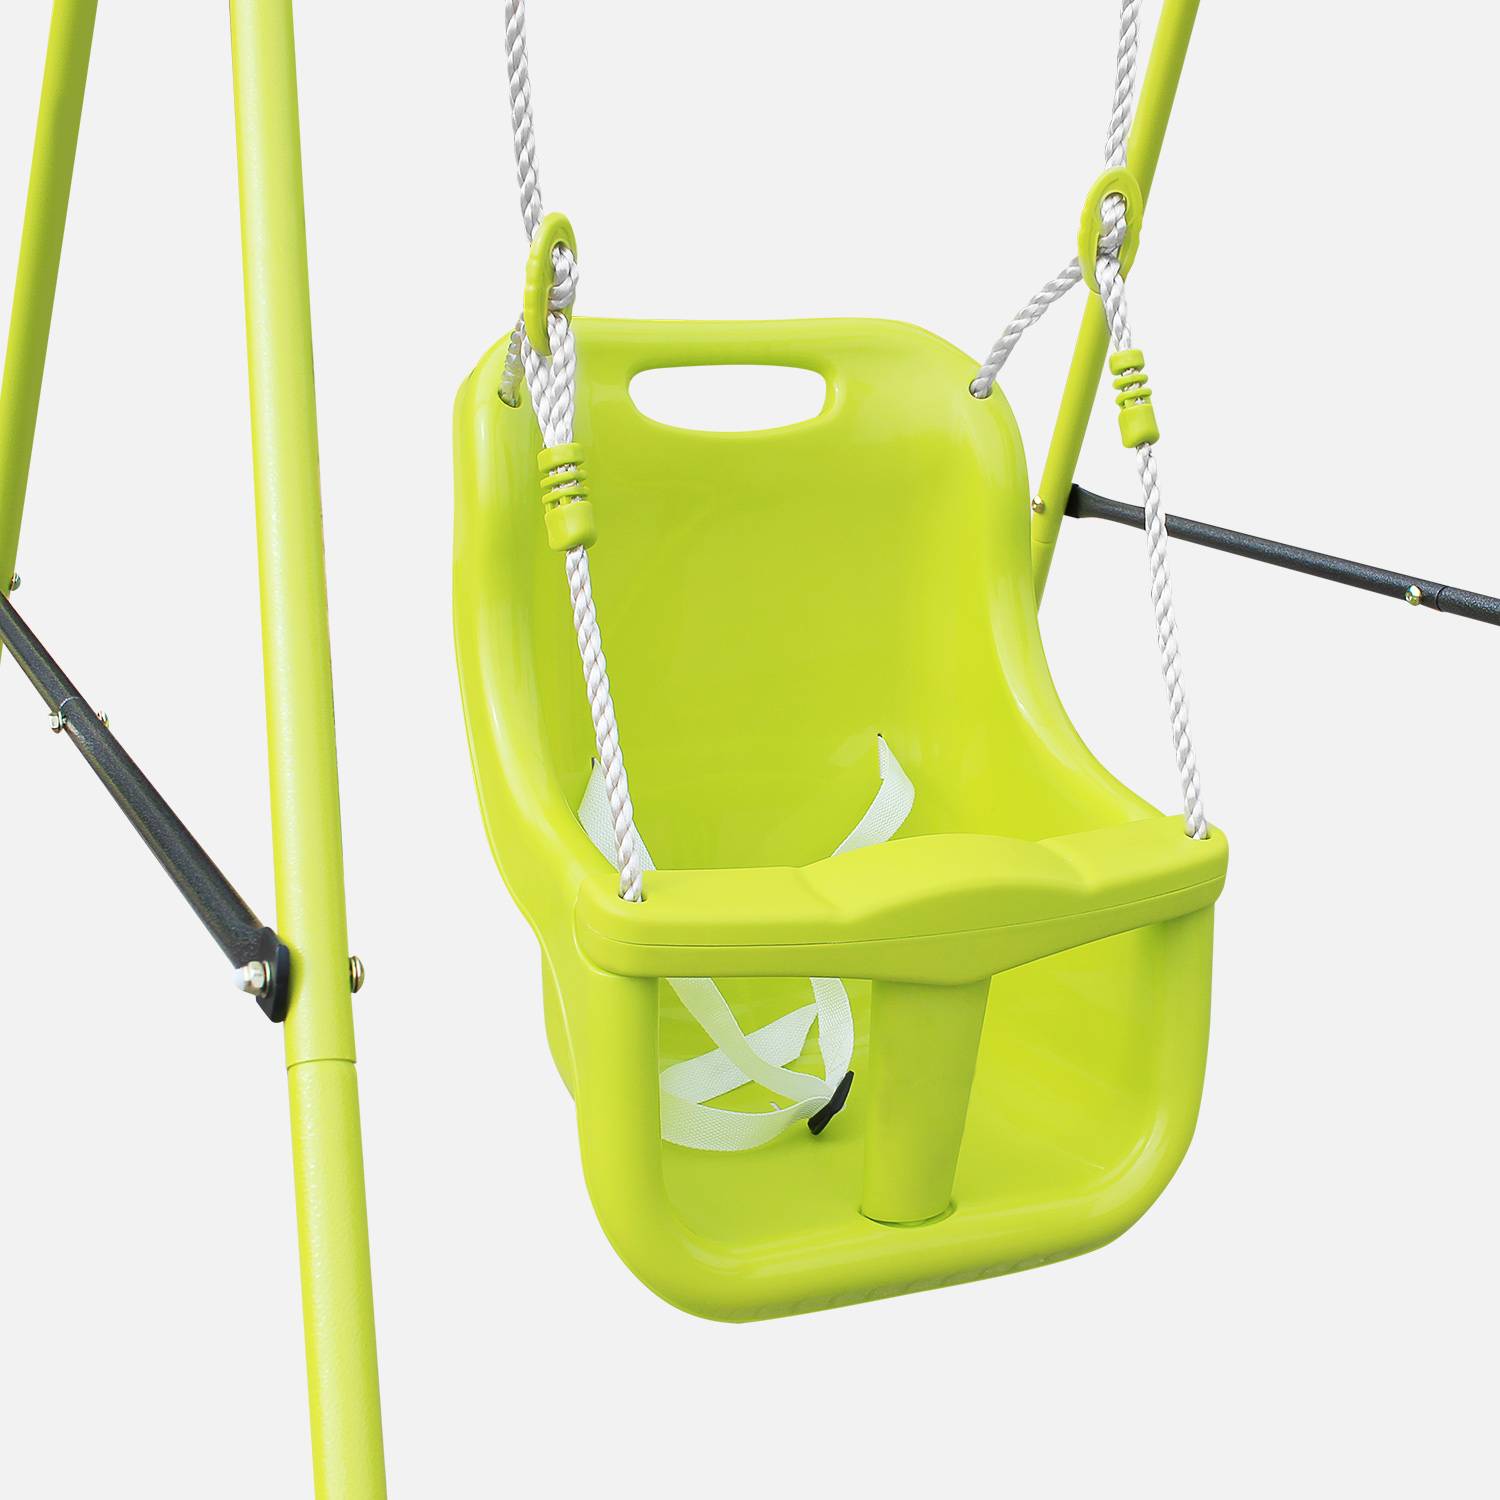 Toddler and kids garden swing, 97x147x118cm, Farou, Metal frame, Plastic seat, Green Photo6